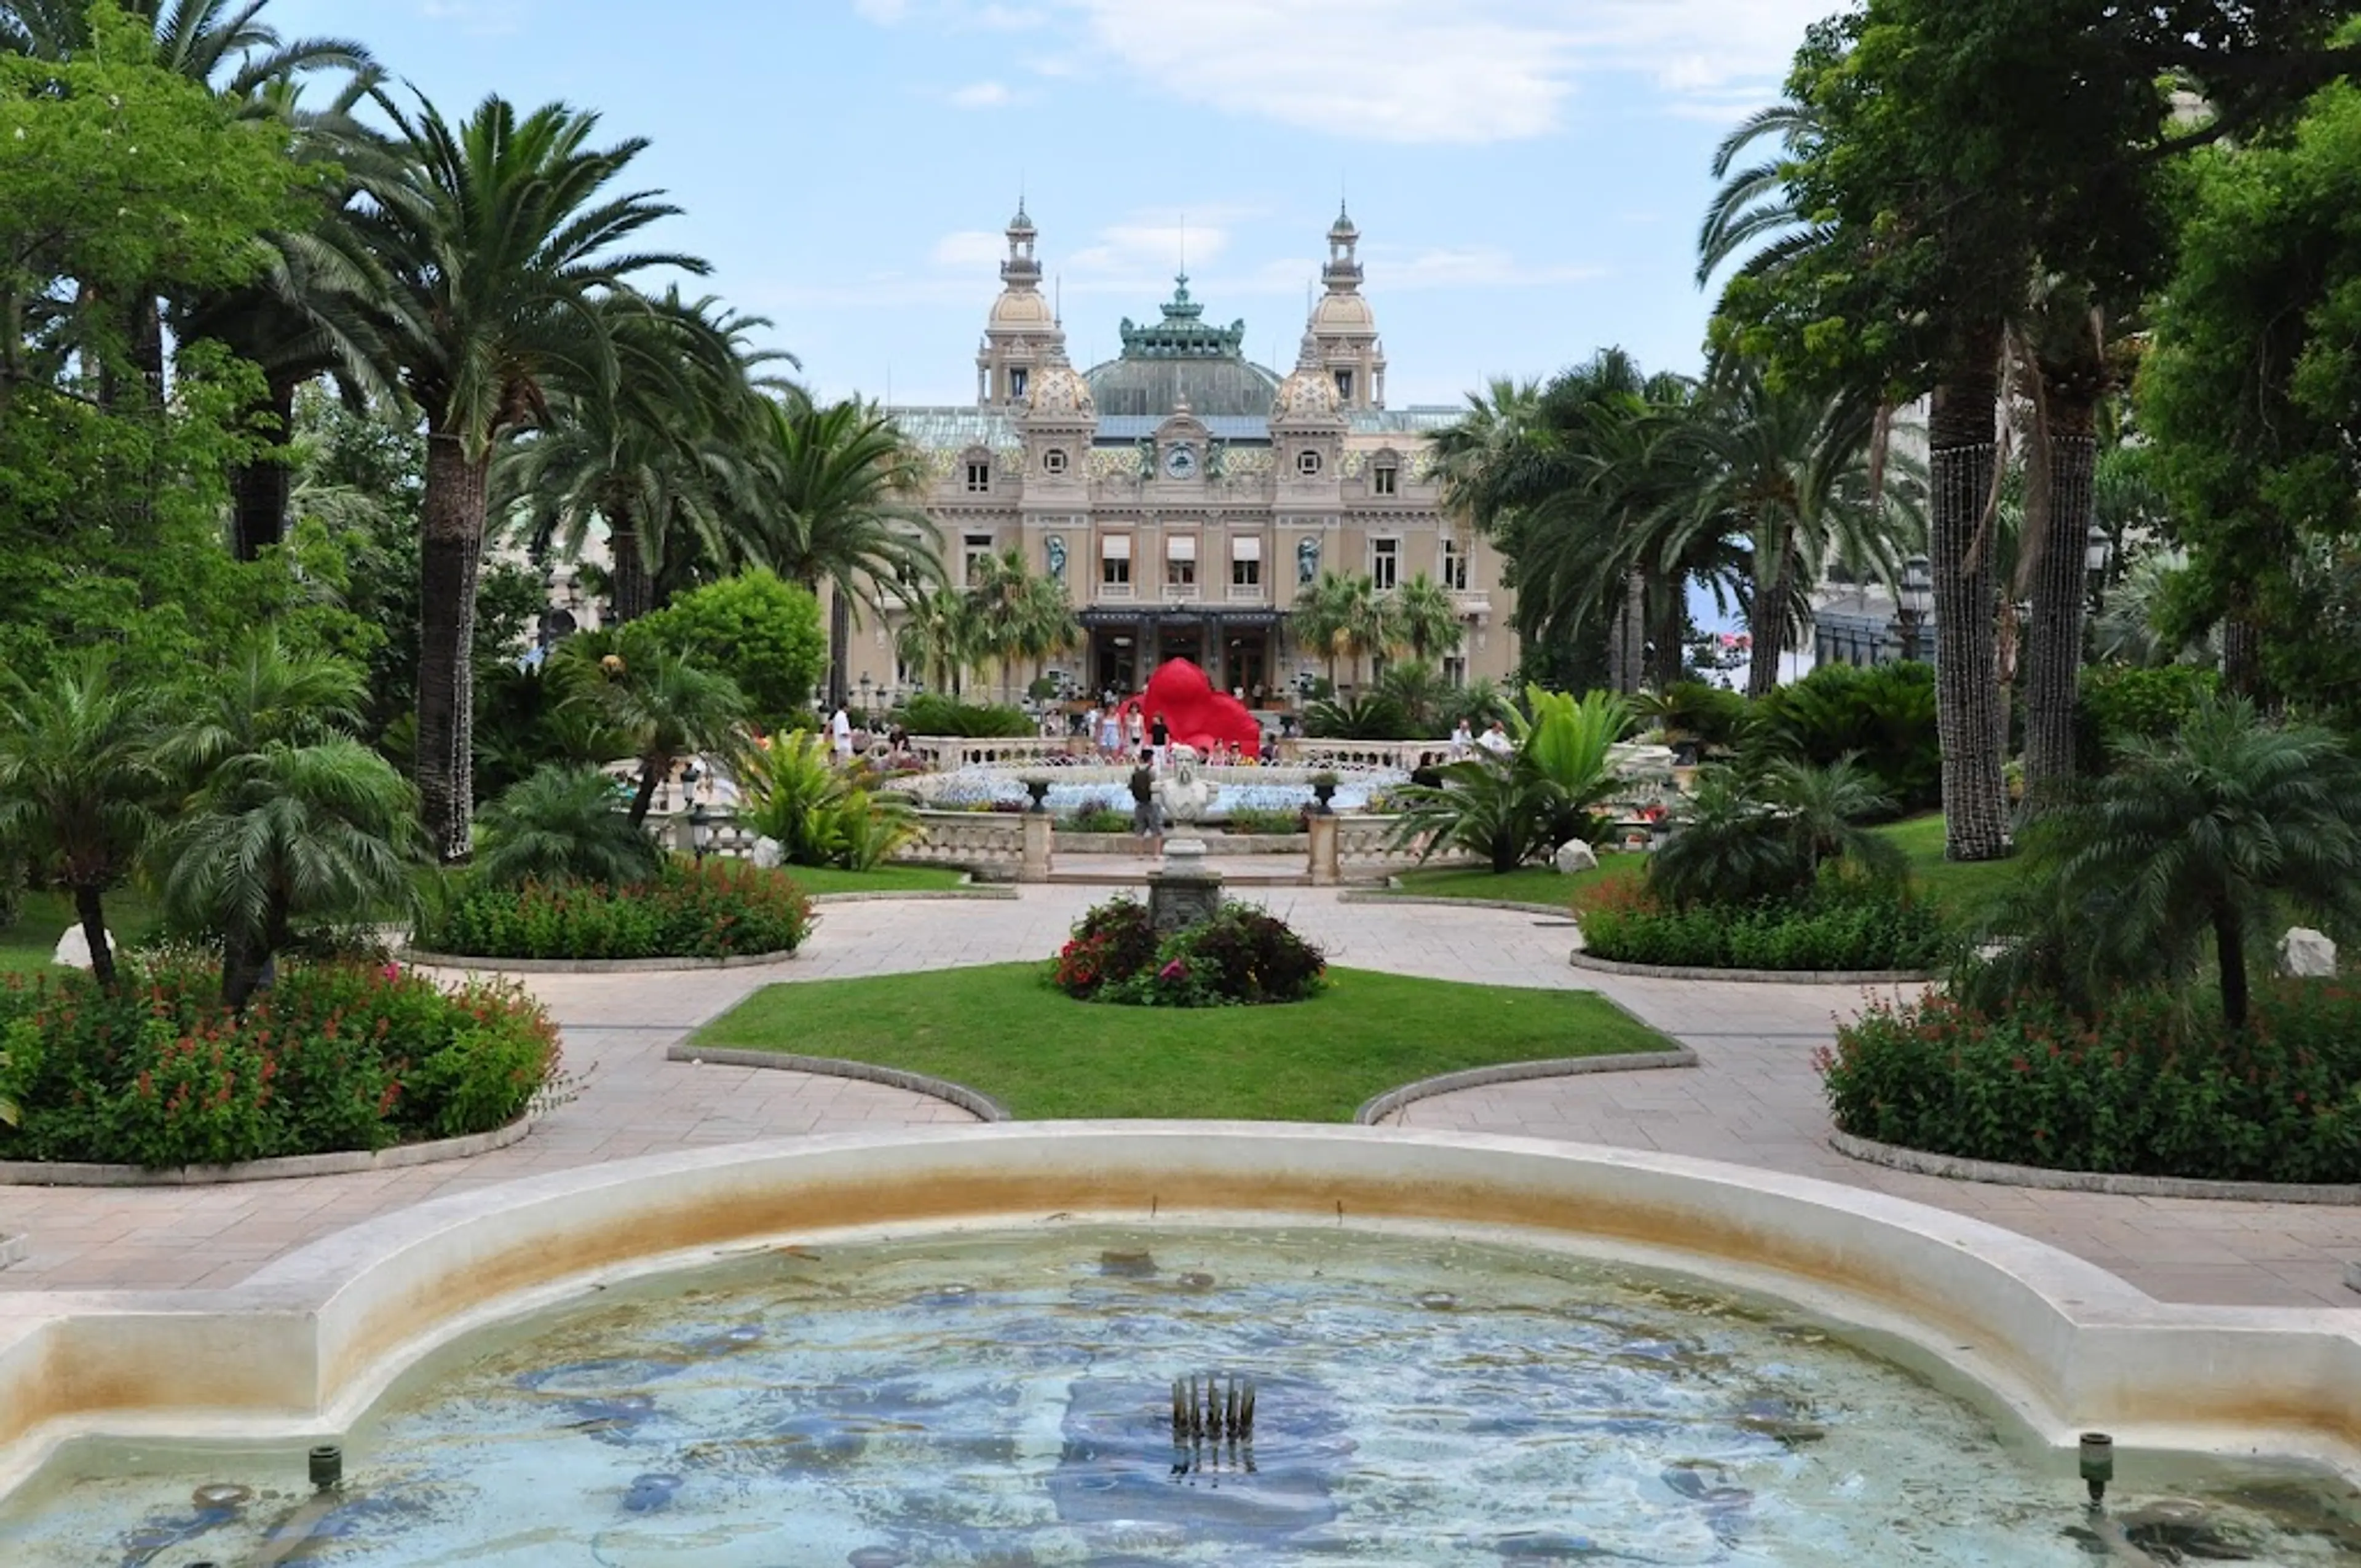 Monte Carlo's Gardens